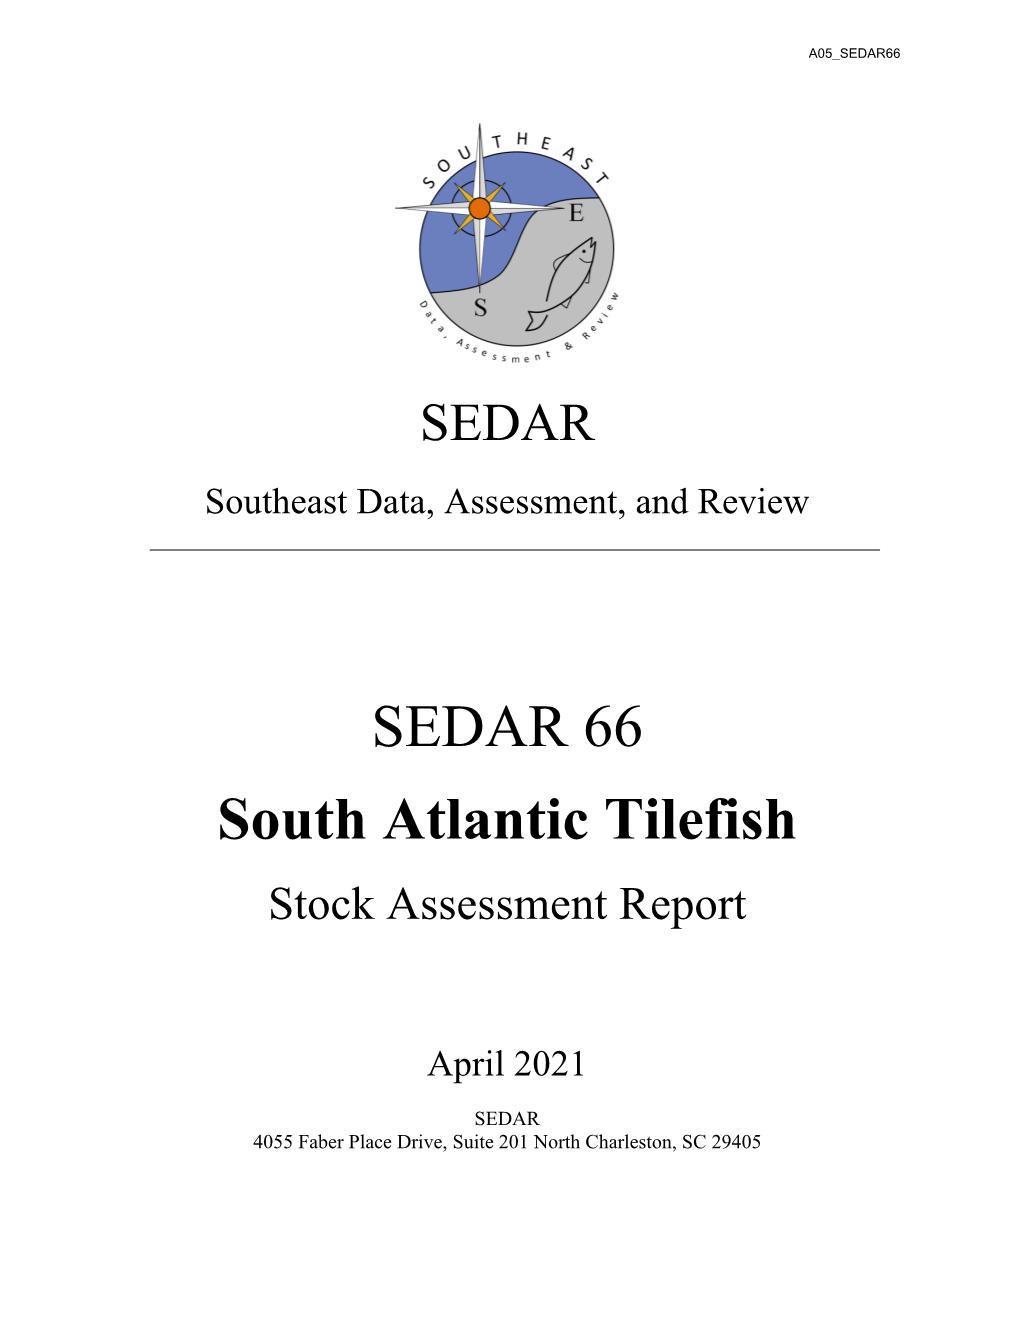 SEDAR 66 South Atlantic Tilefish Stock Assessment Report